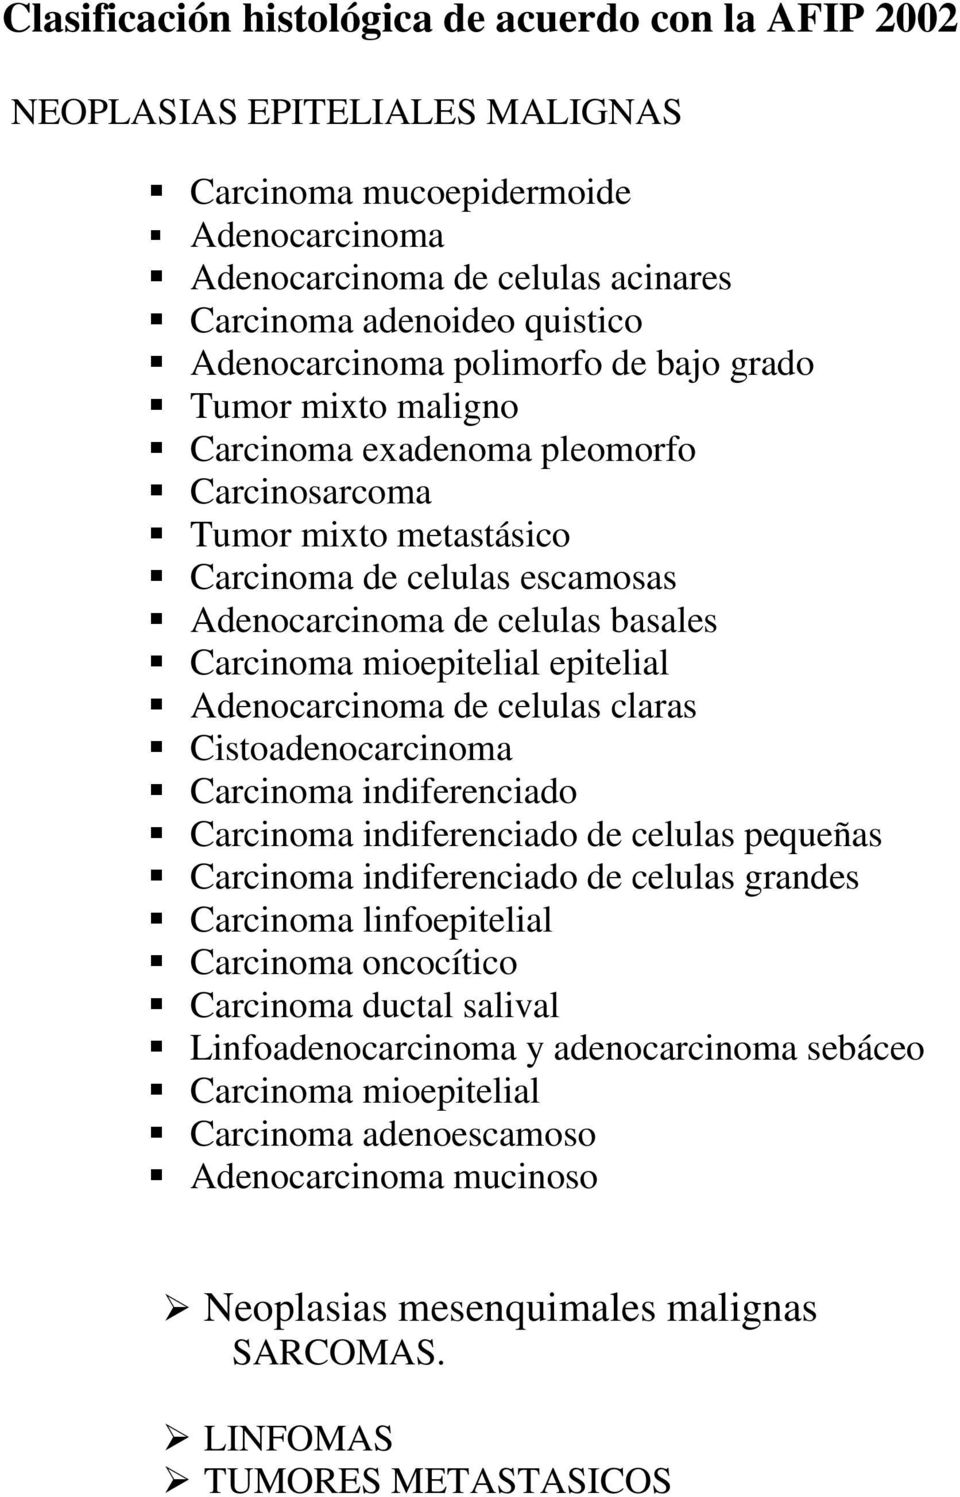 Carcinoma mioepitelial epitelial Adenocarcinoma de celulas claras Cistoadenocarcinoma Carcinoma indiferenciado Carcinoma indiferenciado de celulas pequeñas Carcinoma indiferenciado de celulas grandes